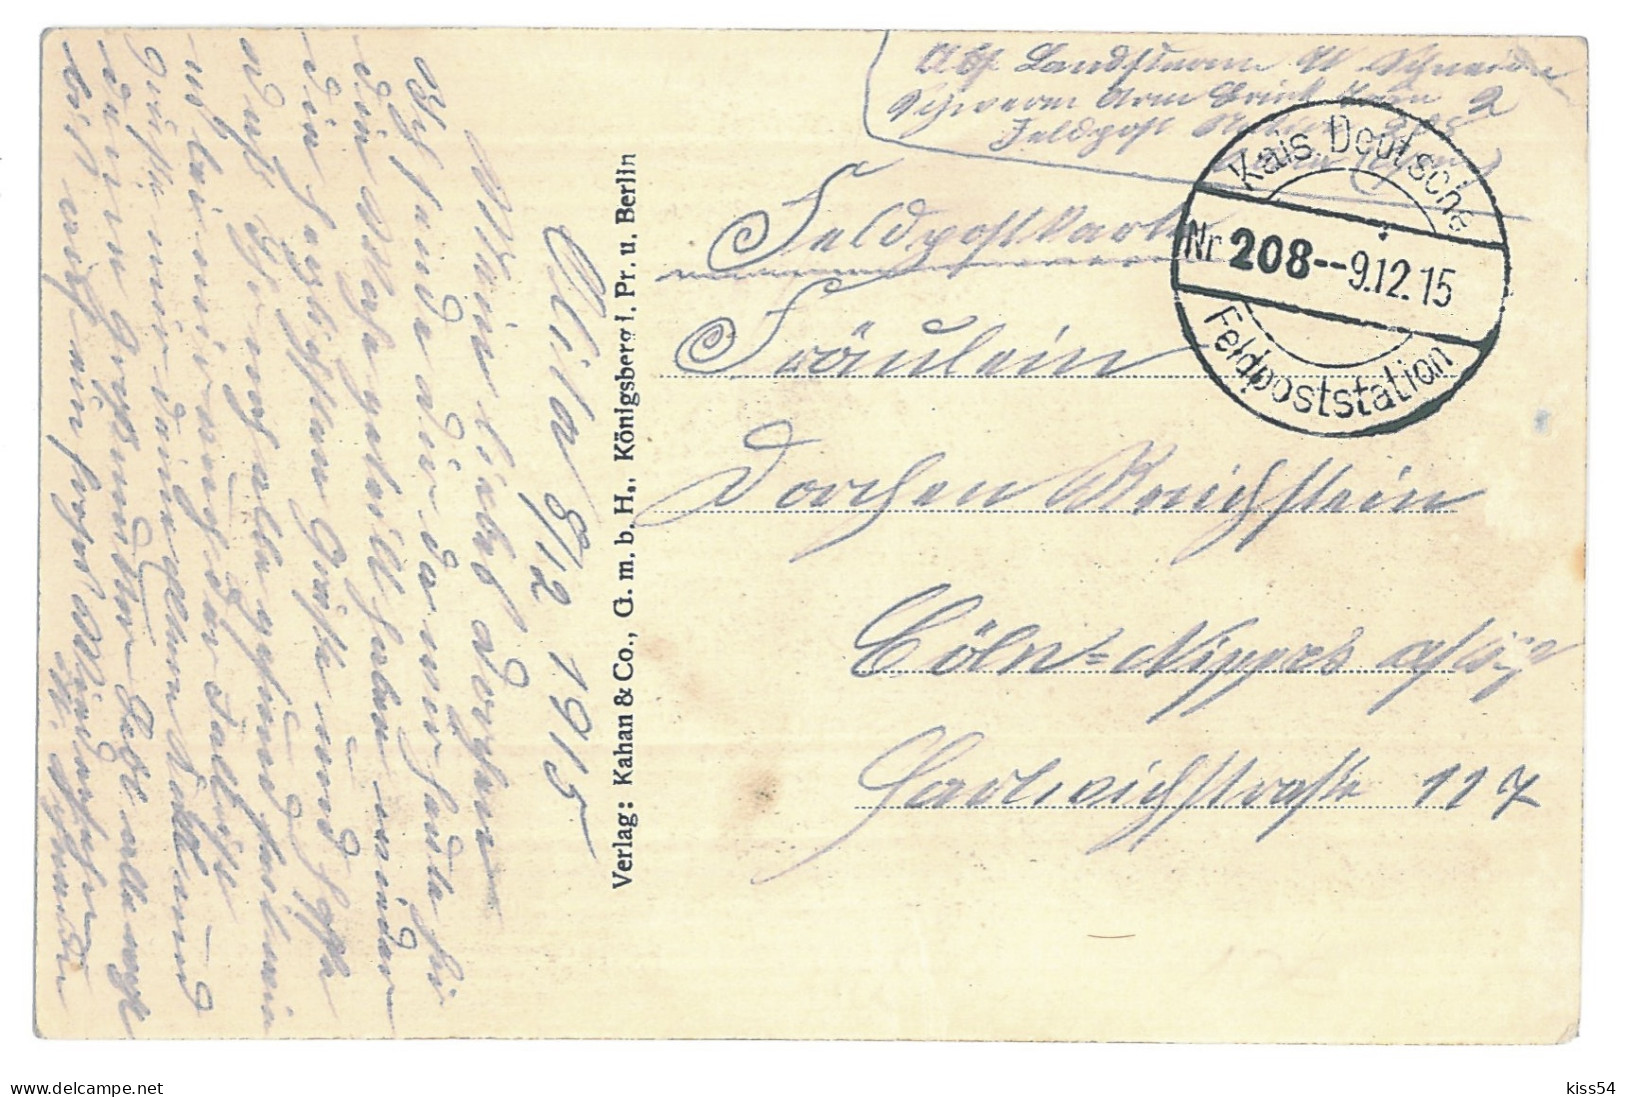 BL 31 - 13982 GRODNO, Belarus, Military Convoy - Old Postcard, CENSOR - Used - 1915 - Bielorussia